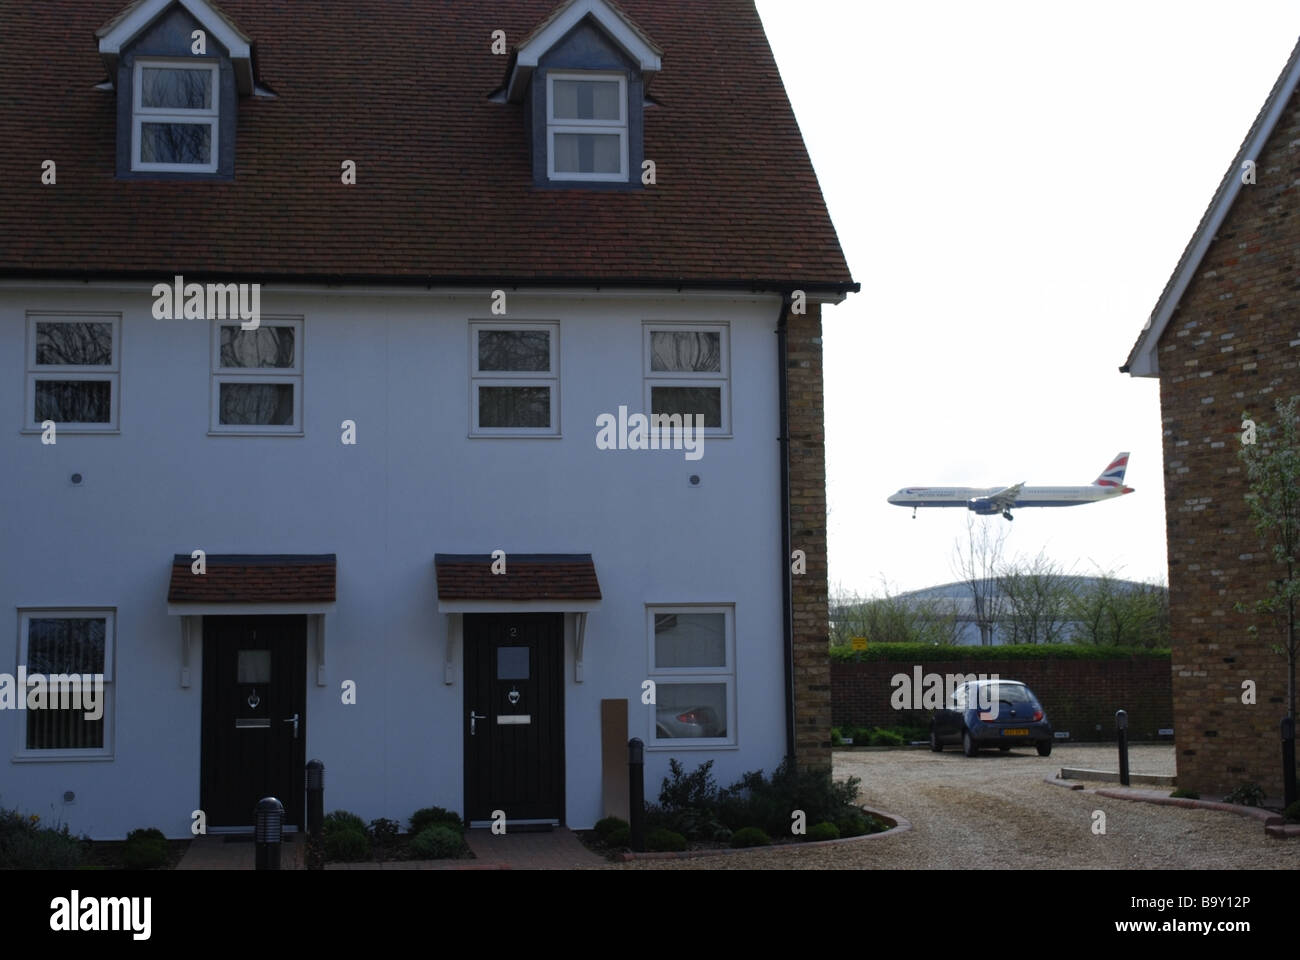 Airplane landing at Heathrow Airport Stock Photo